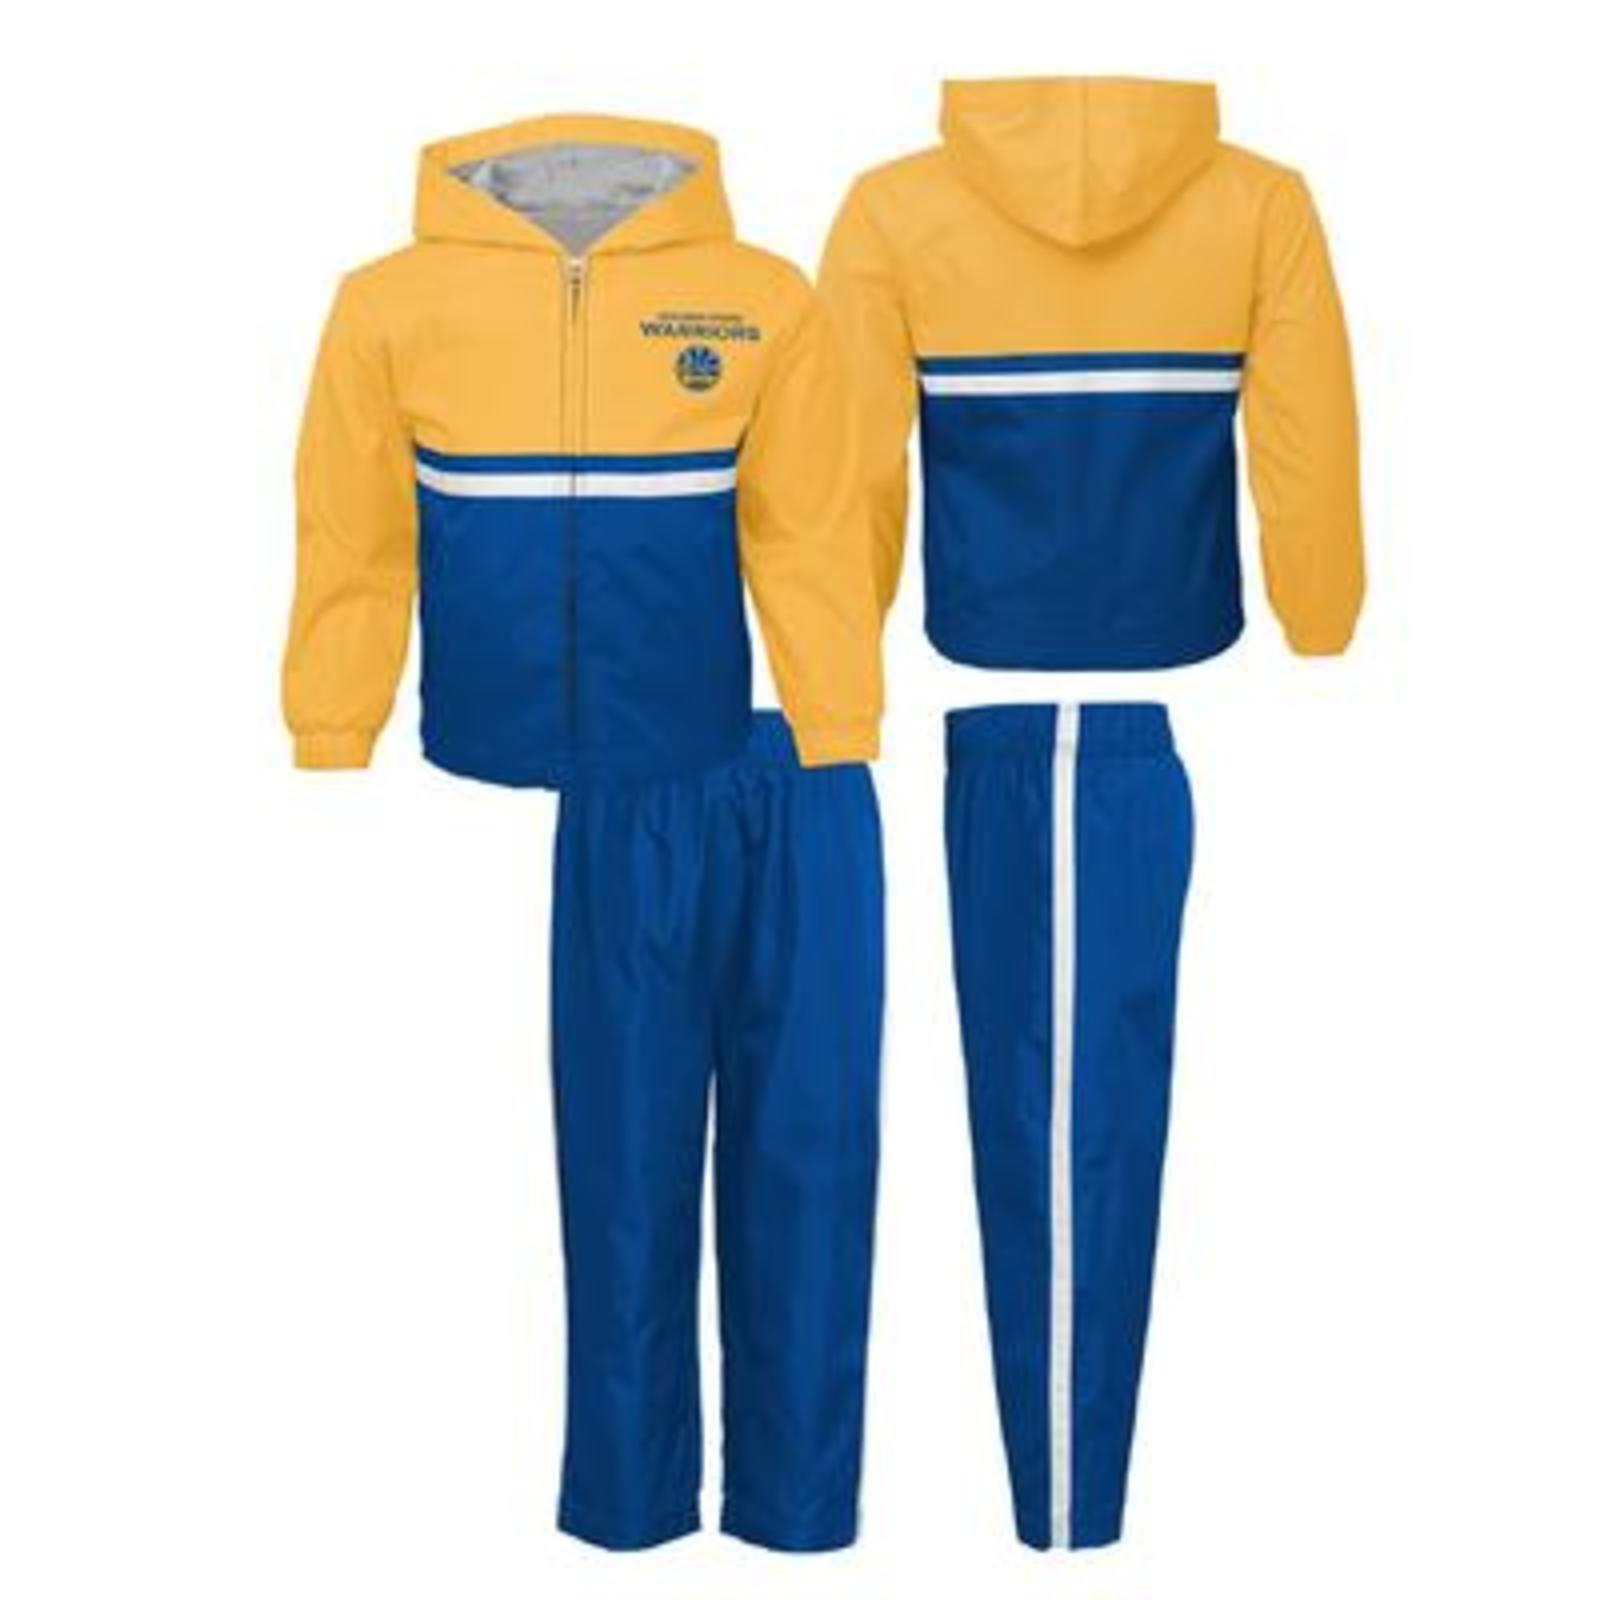 NBA Toddler Boys' Jacket & Pants - Golden State Warriors